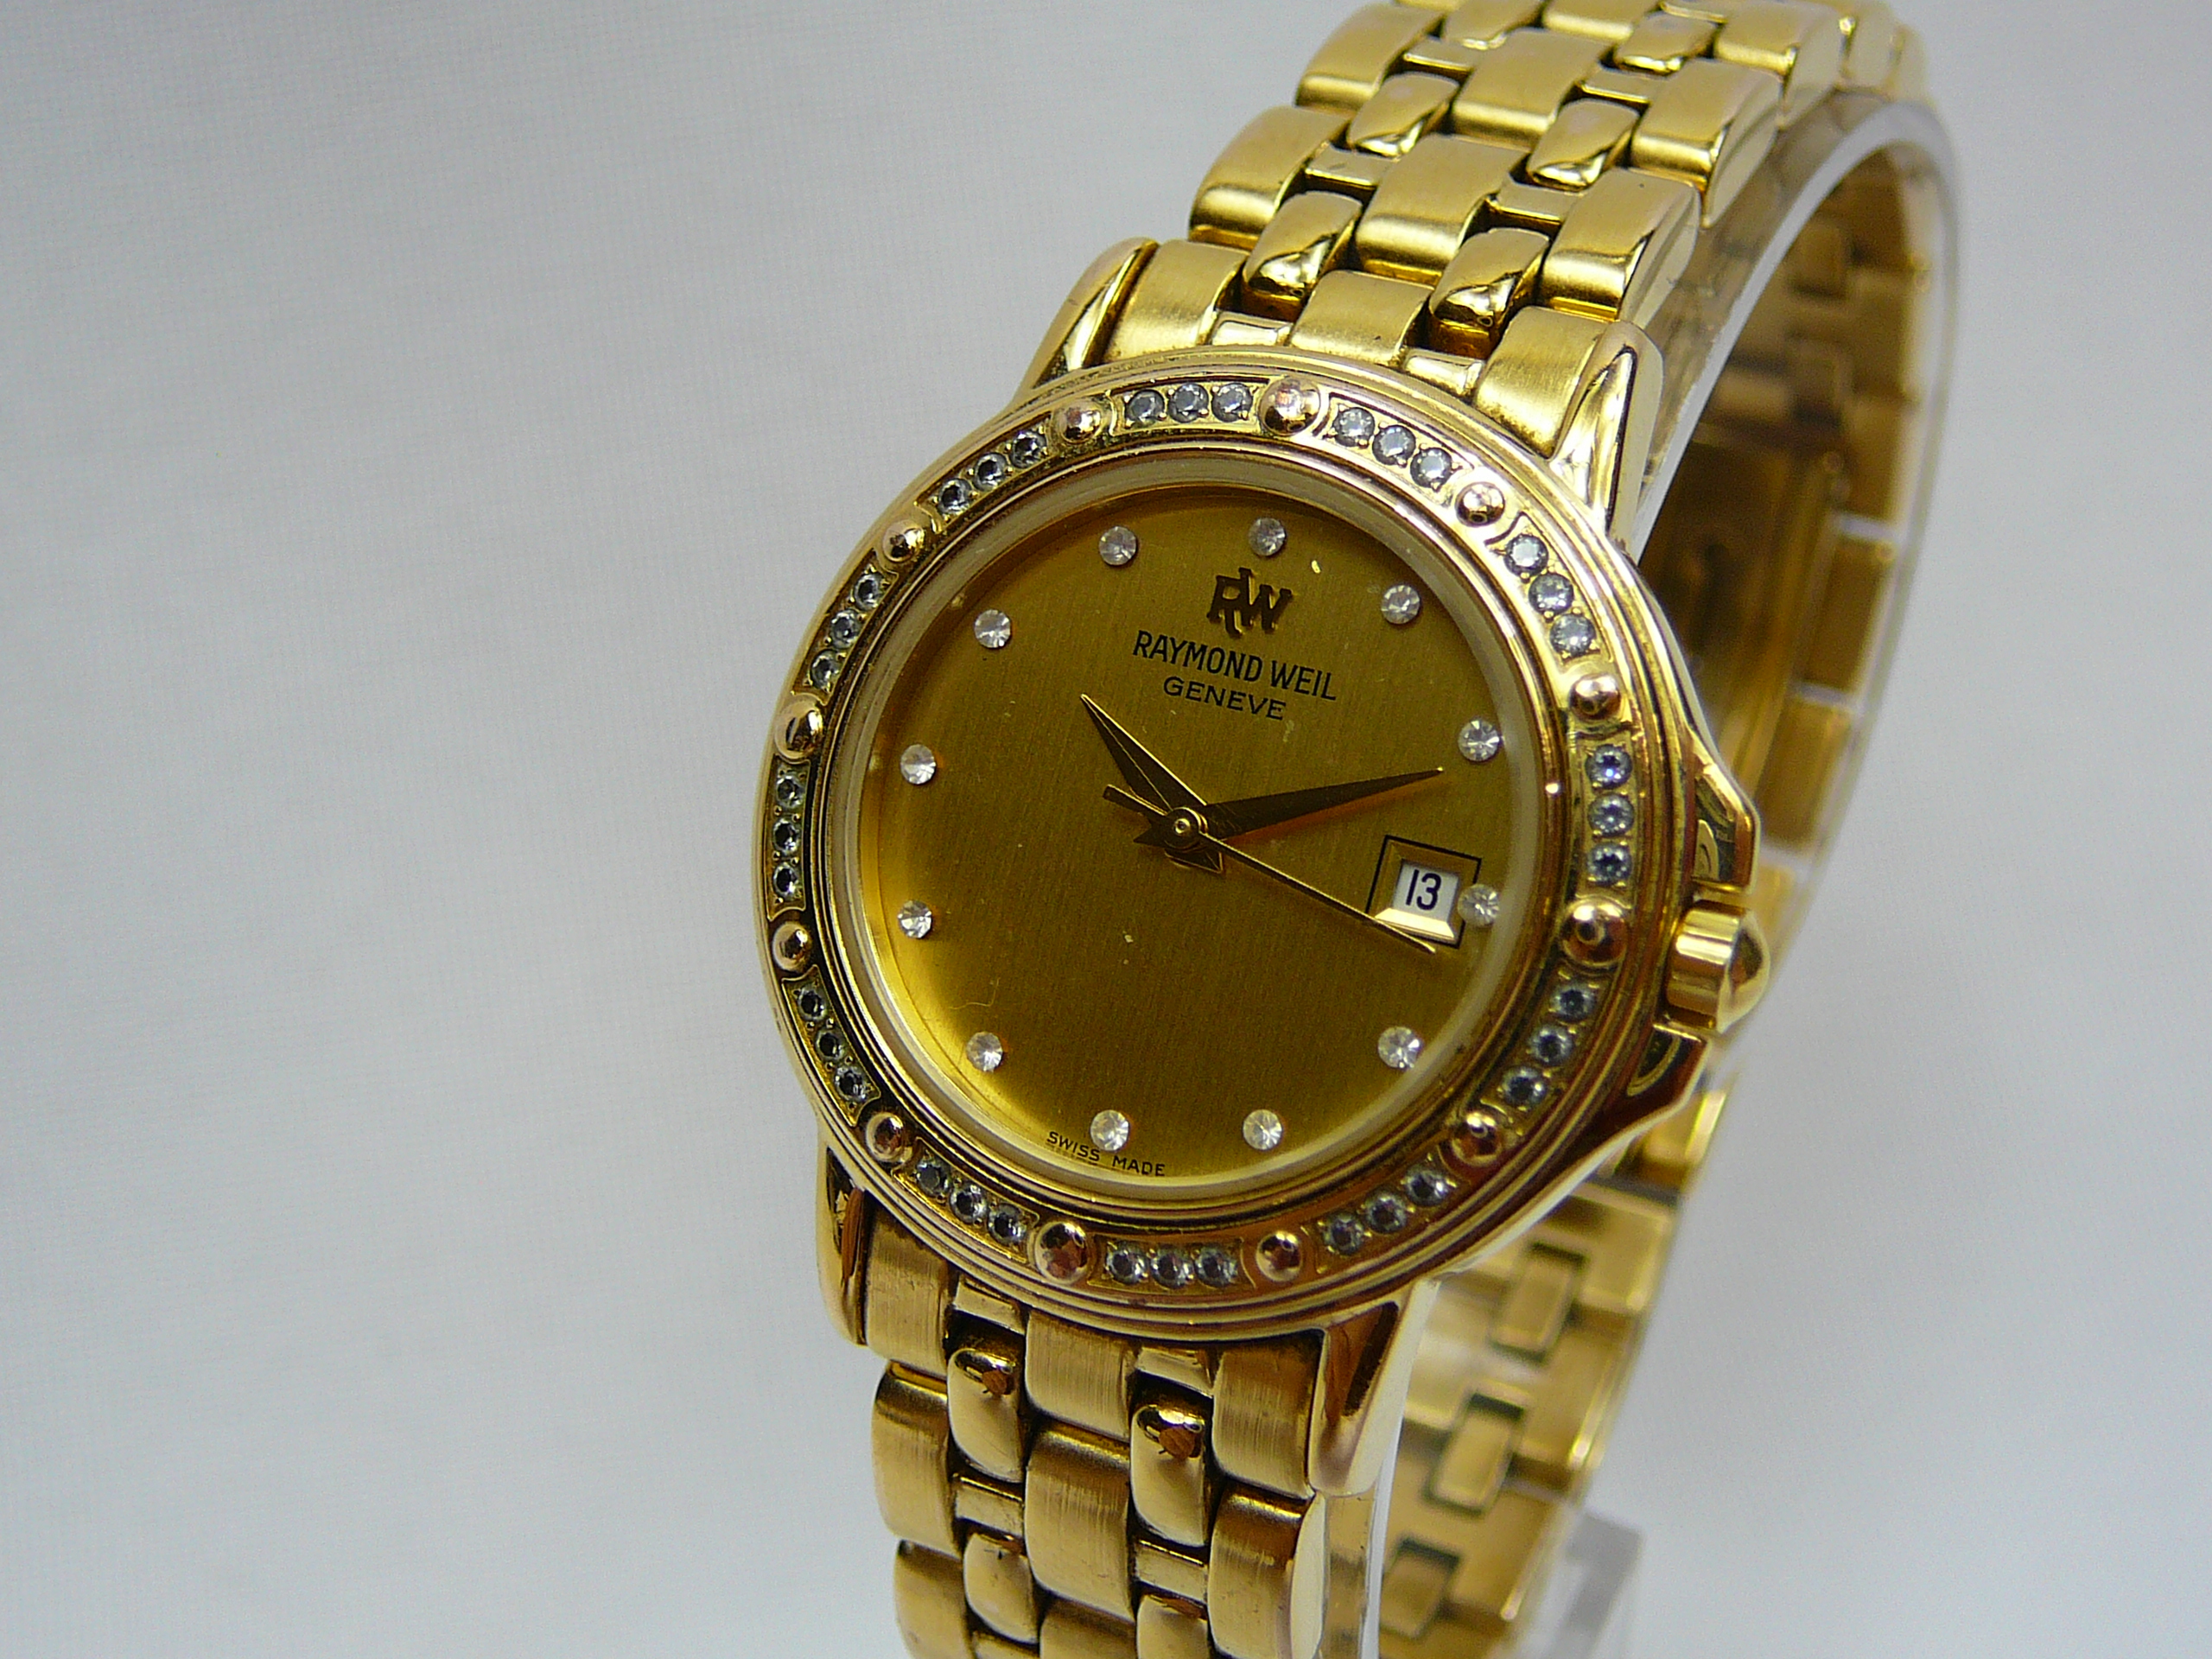 Ladies Raymond Weil Wrist Watch - Image 3 of 4